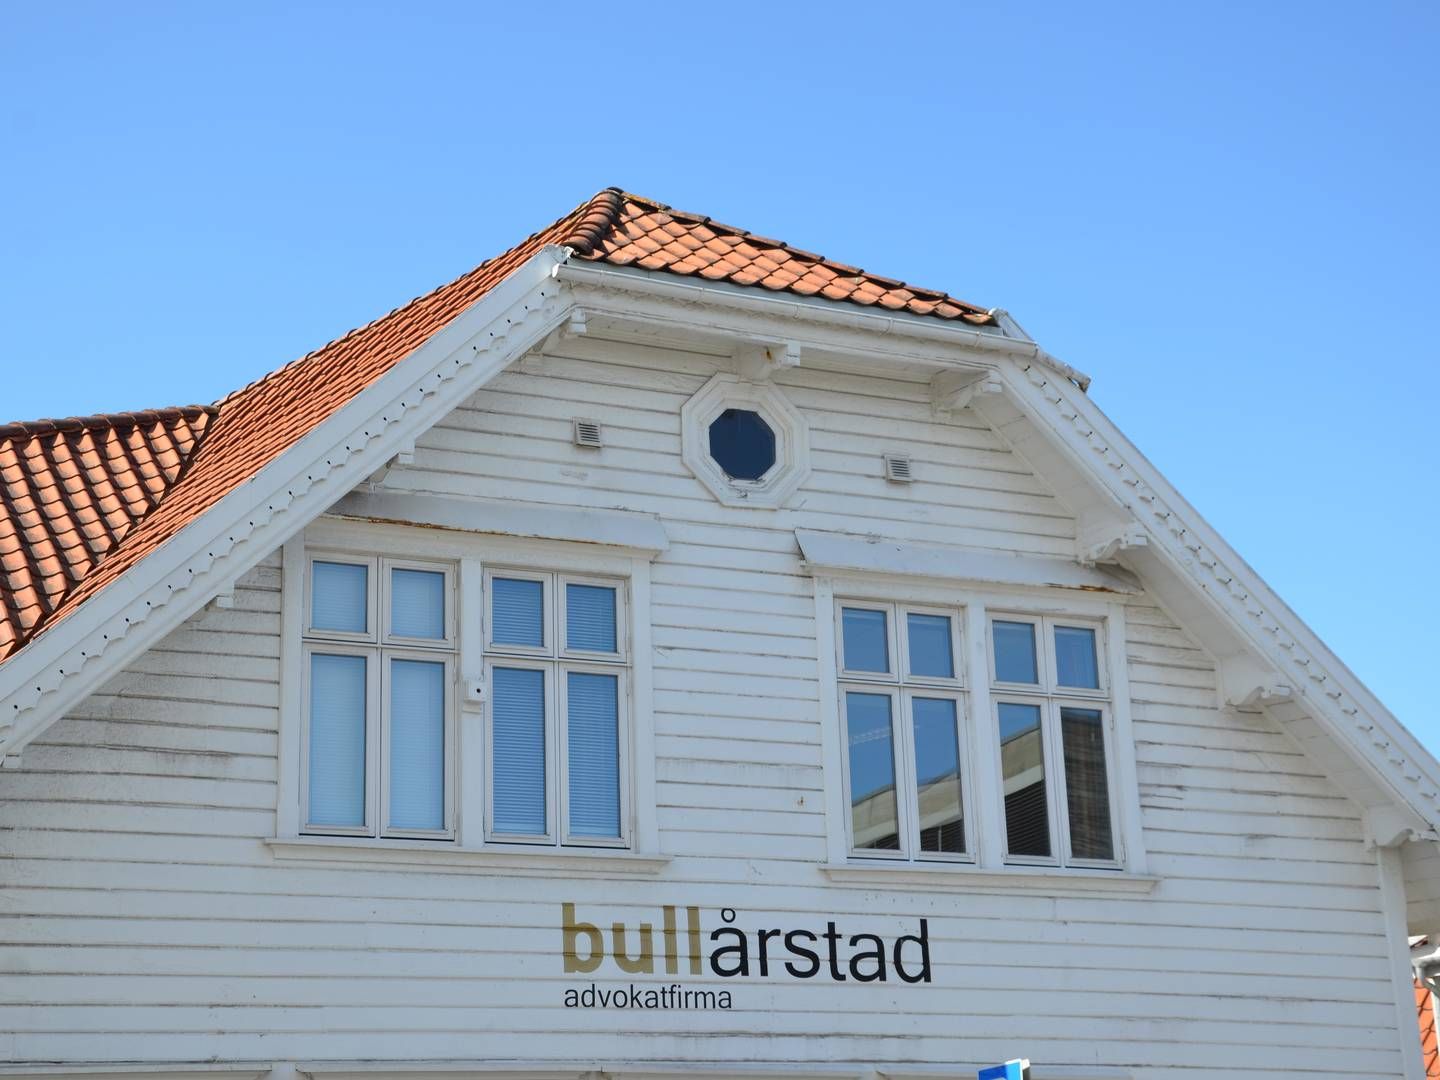 REAGERER: Bull Årstad reagerer på RSM Norges opptreden i forbindelse med fratredelsen. | Photo: Aleksander Simonsen Losnegård / AdvokatWatch